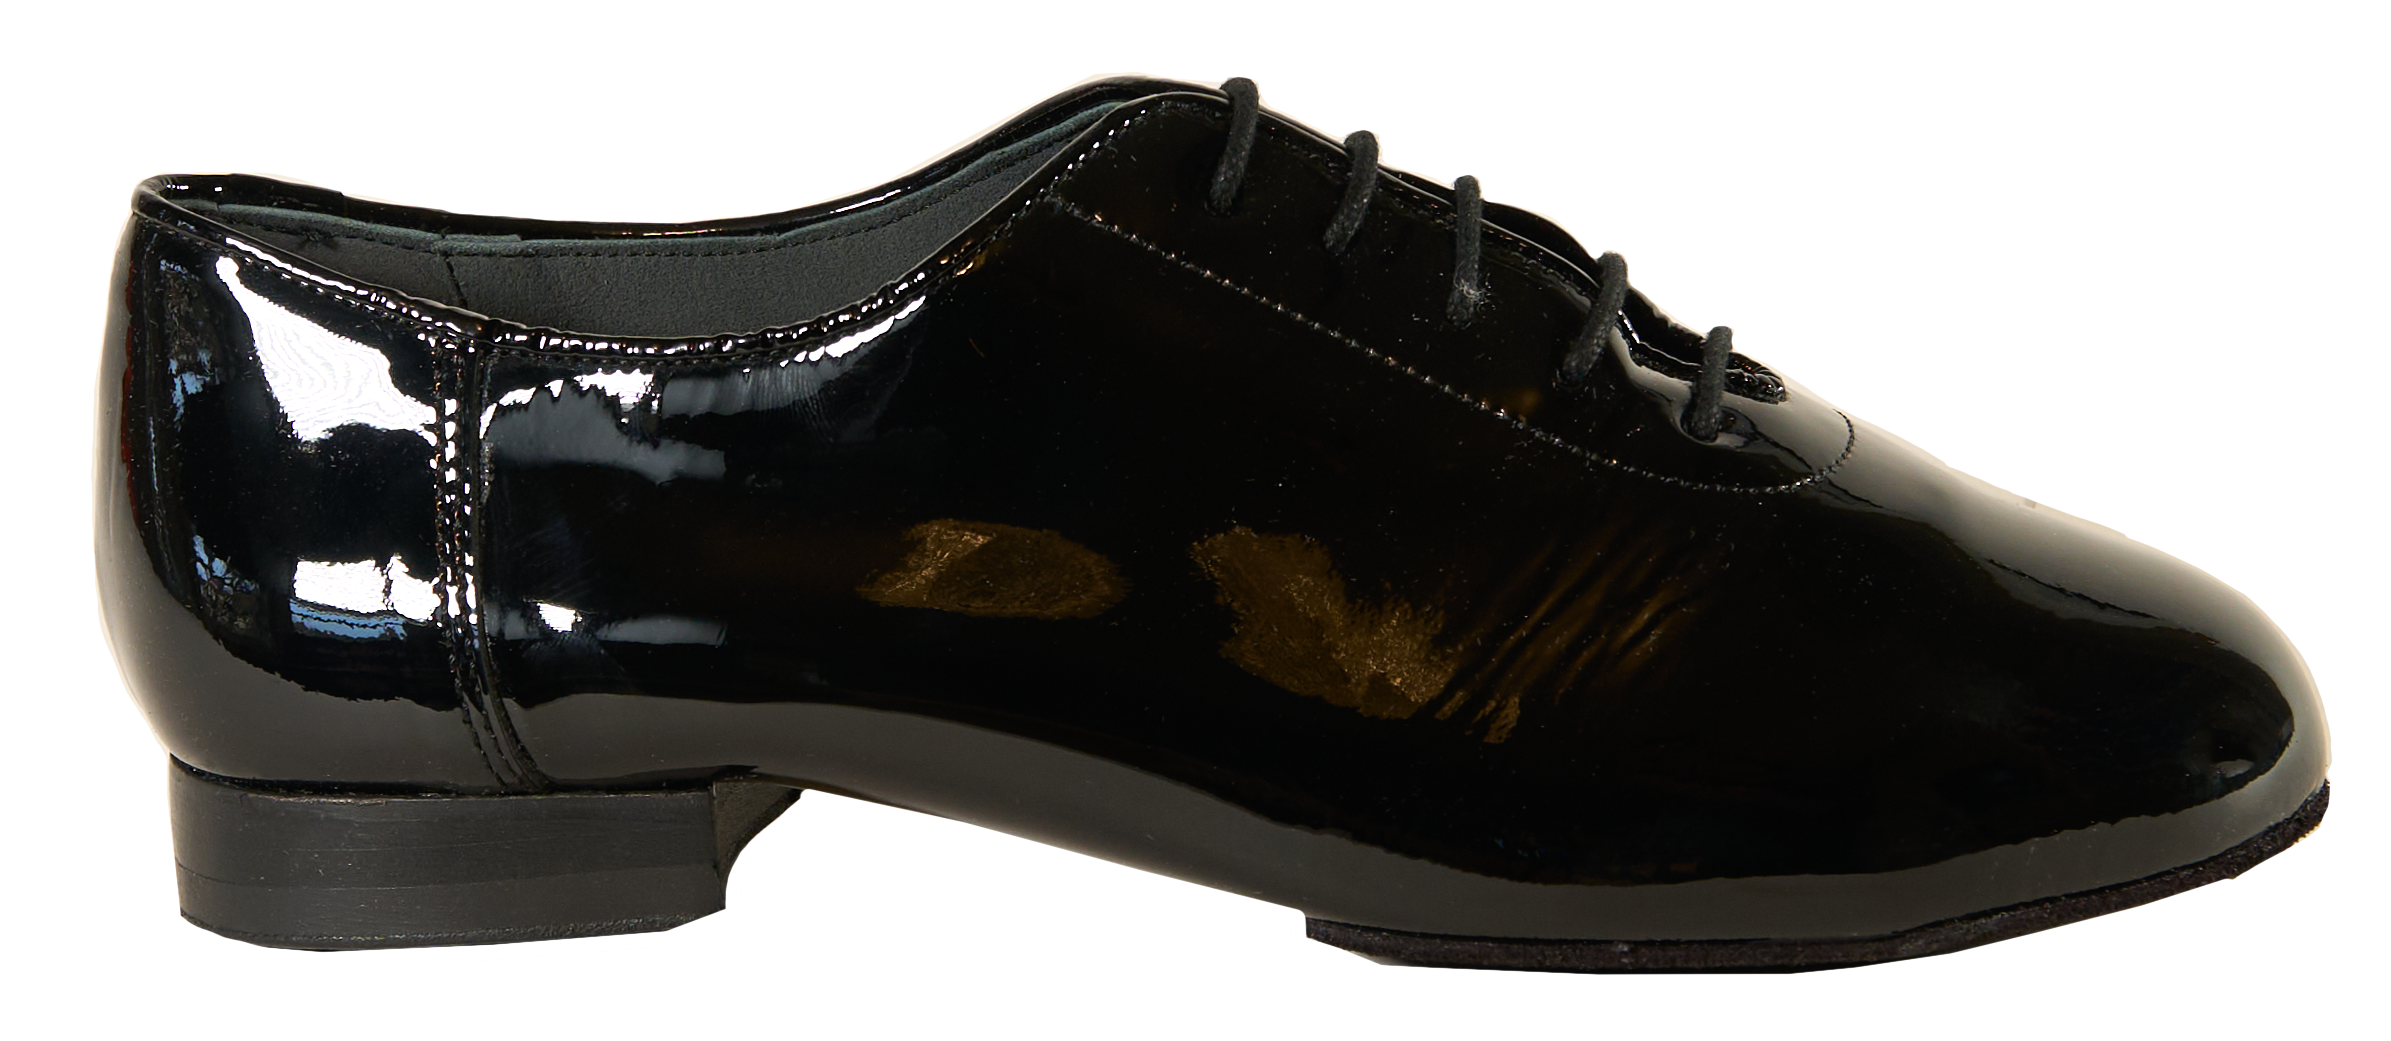 Turino Boys Ballroom Dance Shoes Leather Patent